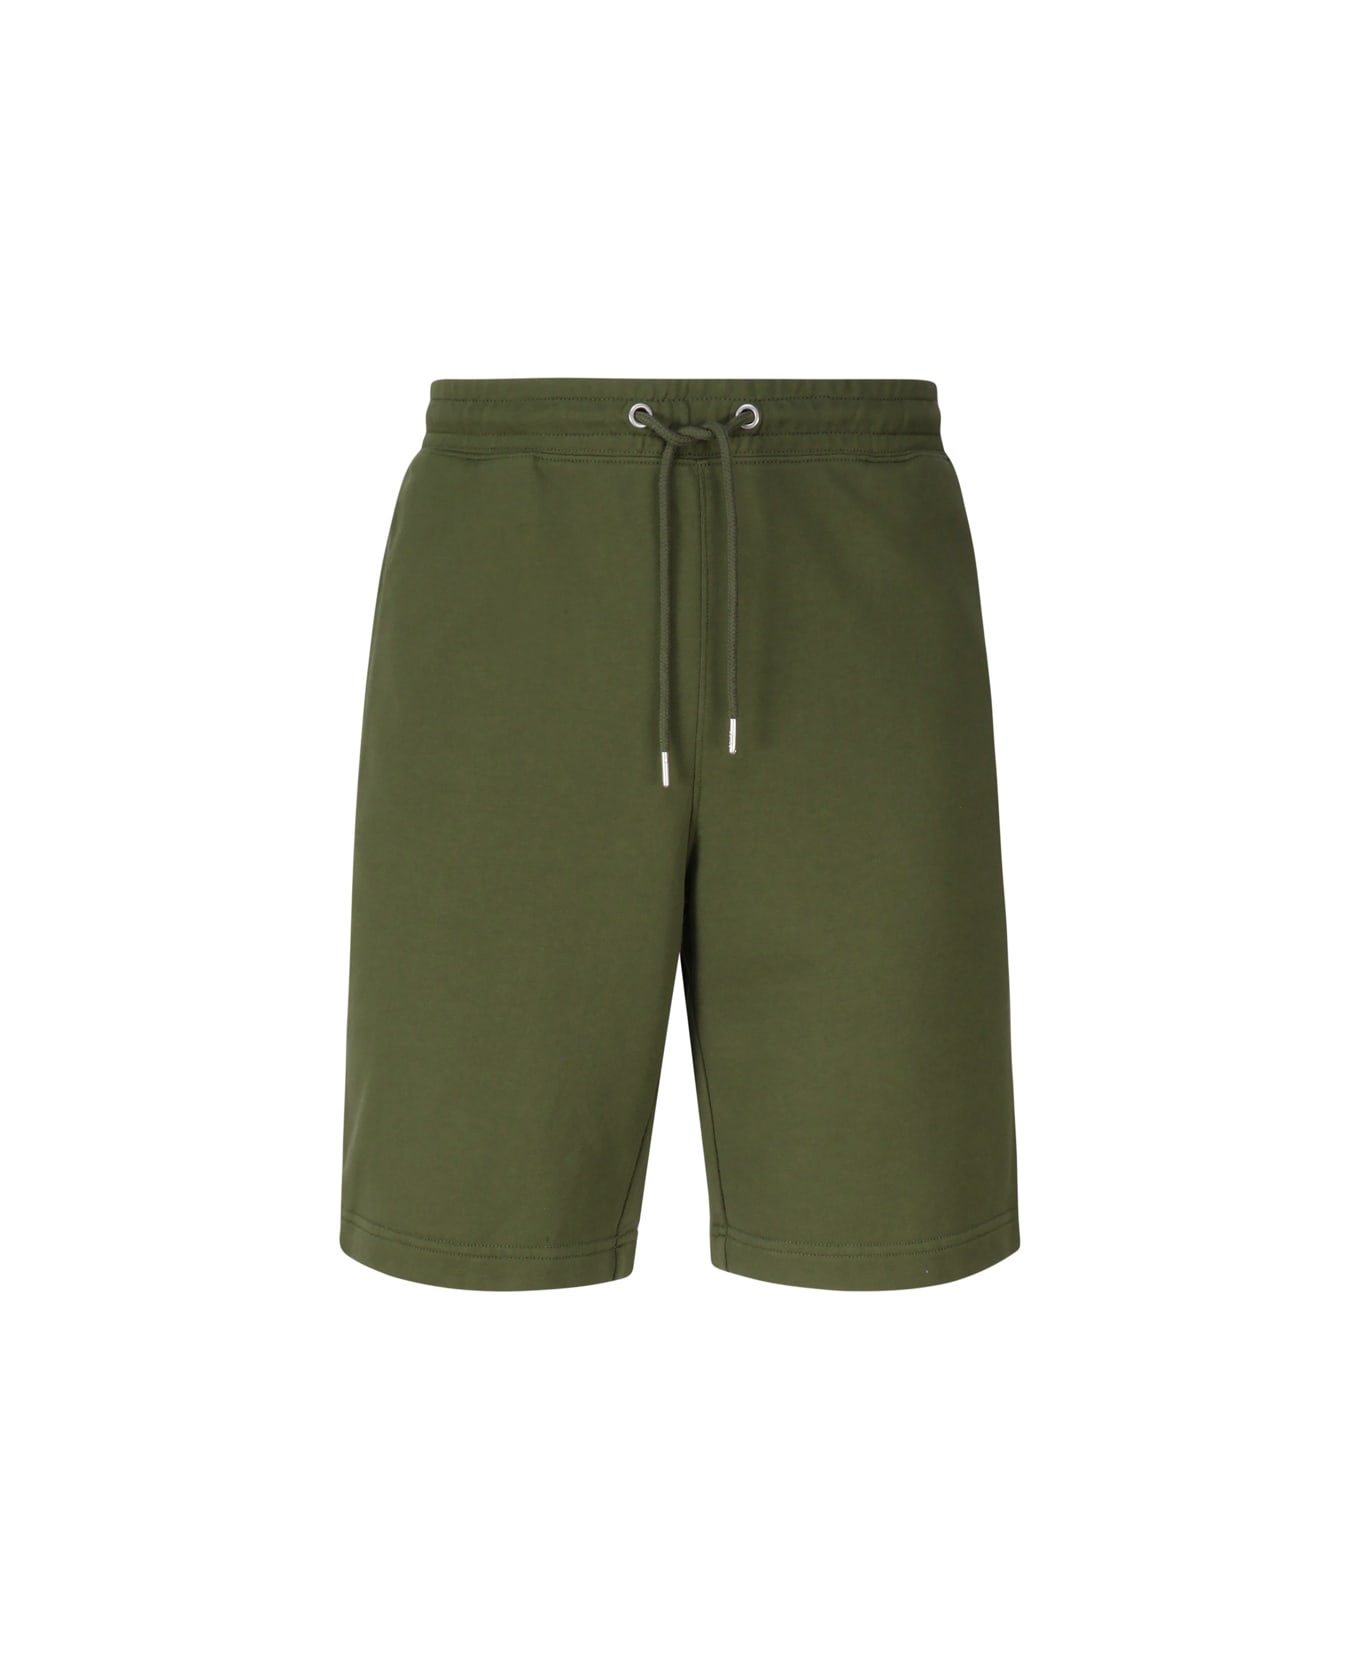 Sun 68 Bermuda Sweatpants - Military green